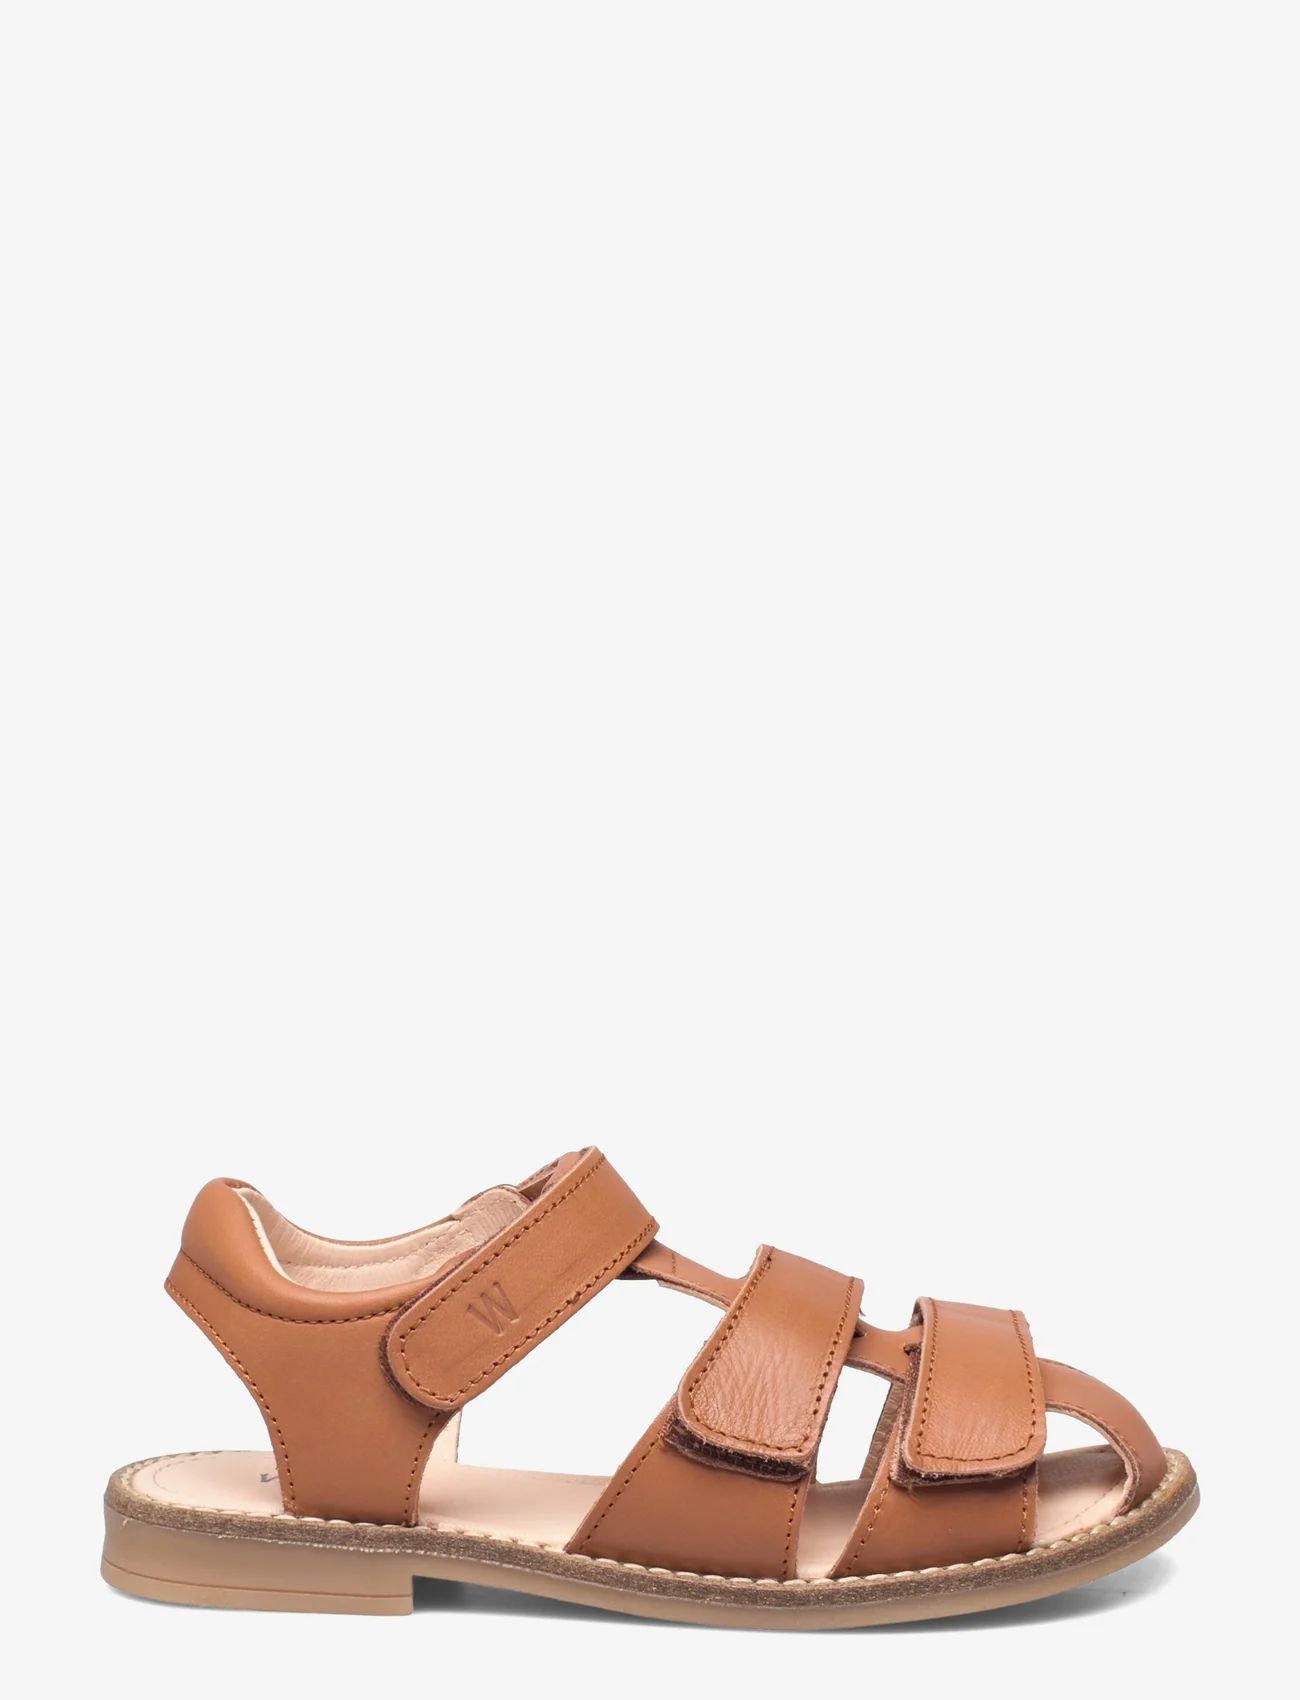 Wheat - Addison leather sandal - vasaras piedāvājumi - amber brown - 1